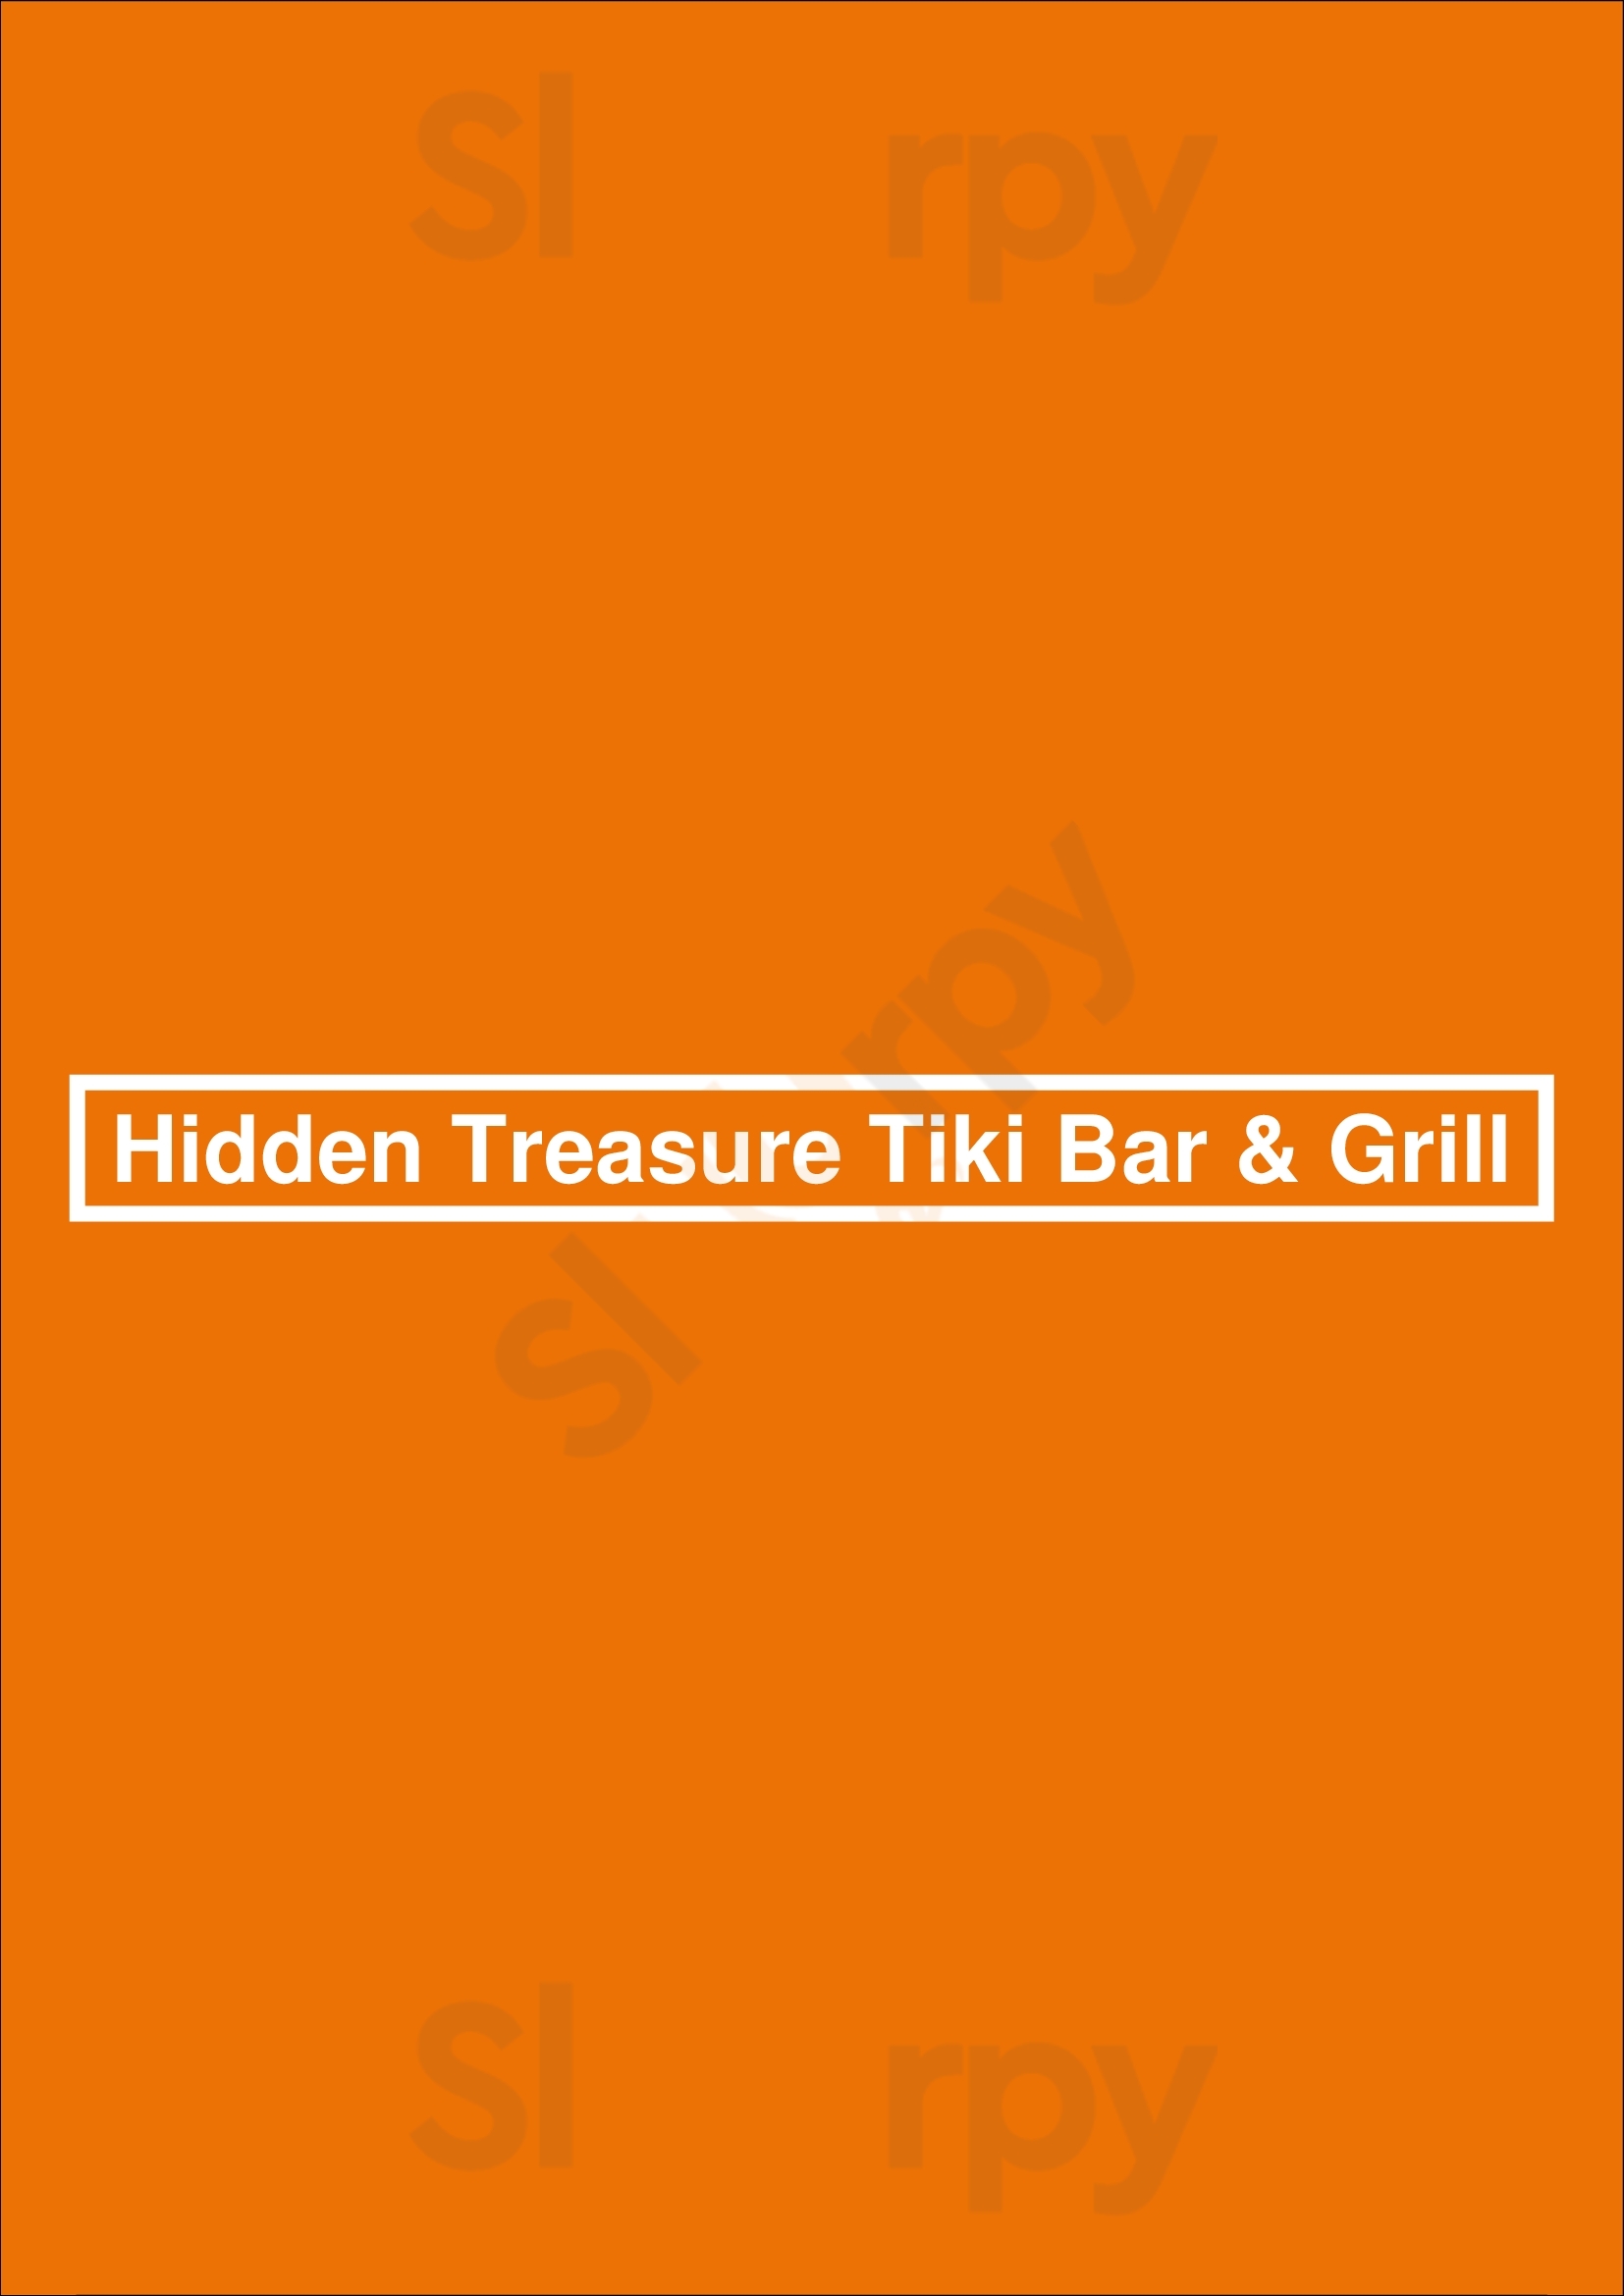 Hidden Treasure Tiki Bar & Grill Port Orange Menu - 1